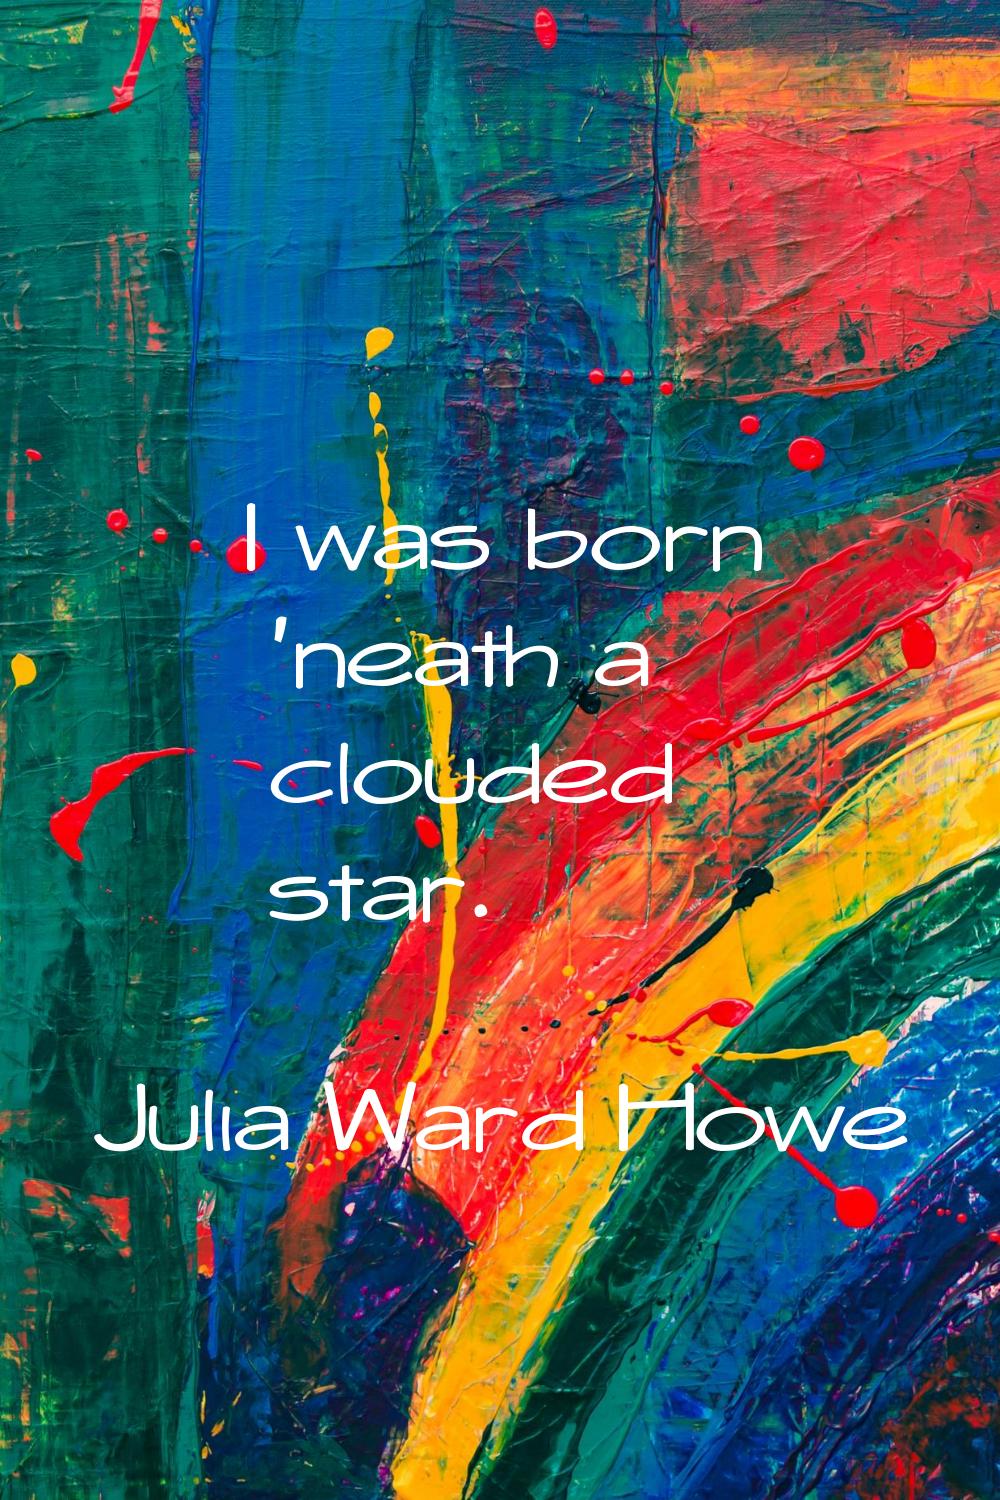 I was born 'neath a clouded star.